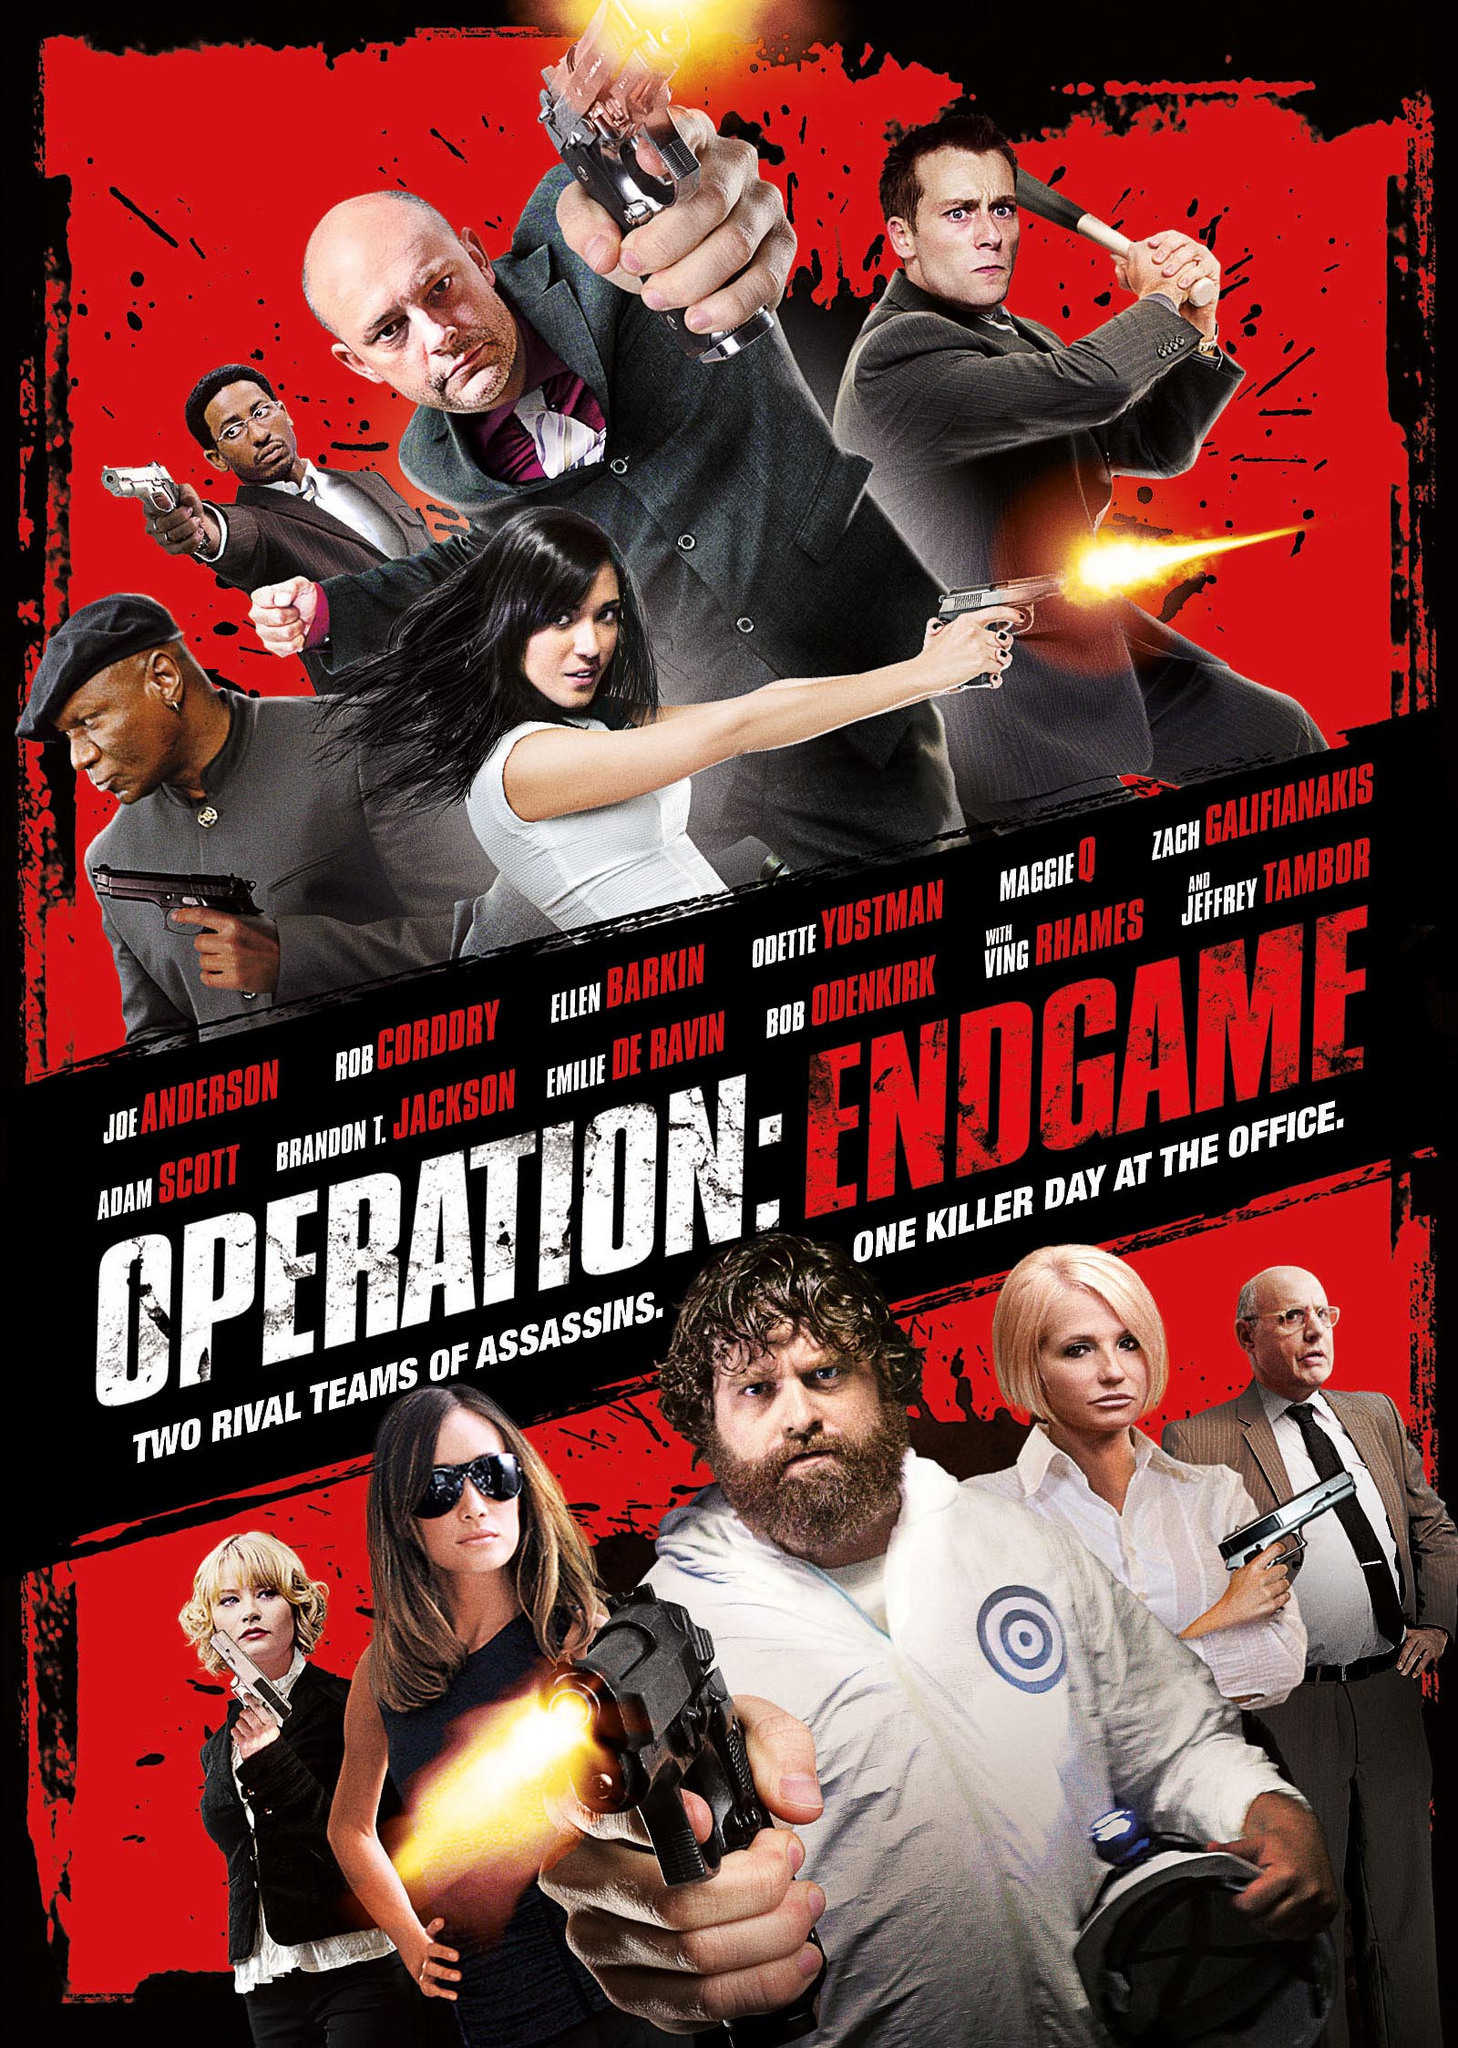 Ellen Barkin, Ving Rhames, Jeffrey Tambor, Zach Galifianakis, Bob Odenkirk, Odette Annable, and Brandon T. Jackson in Operation: Endgame (2010)